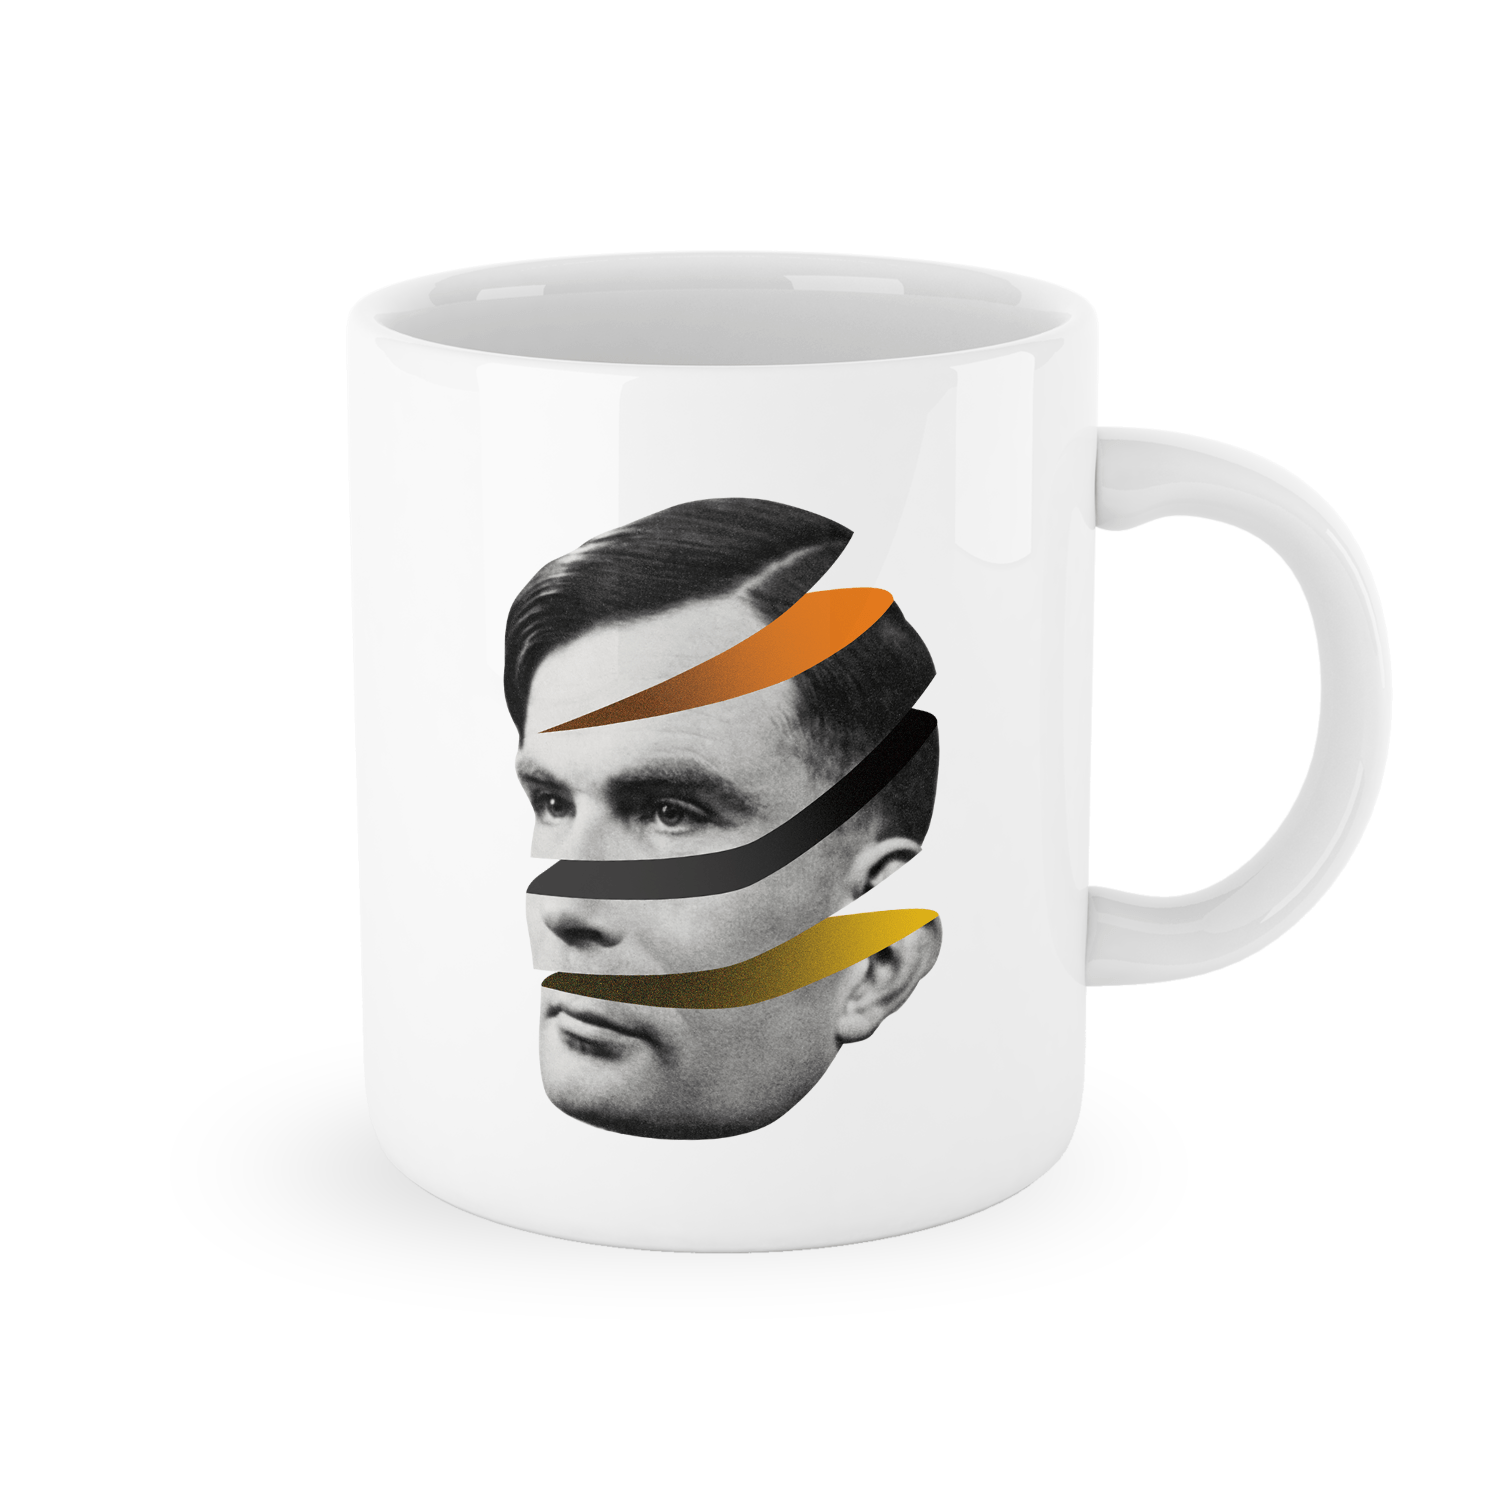 Alan Turing 3D Head Mug -White